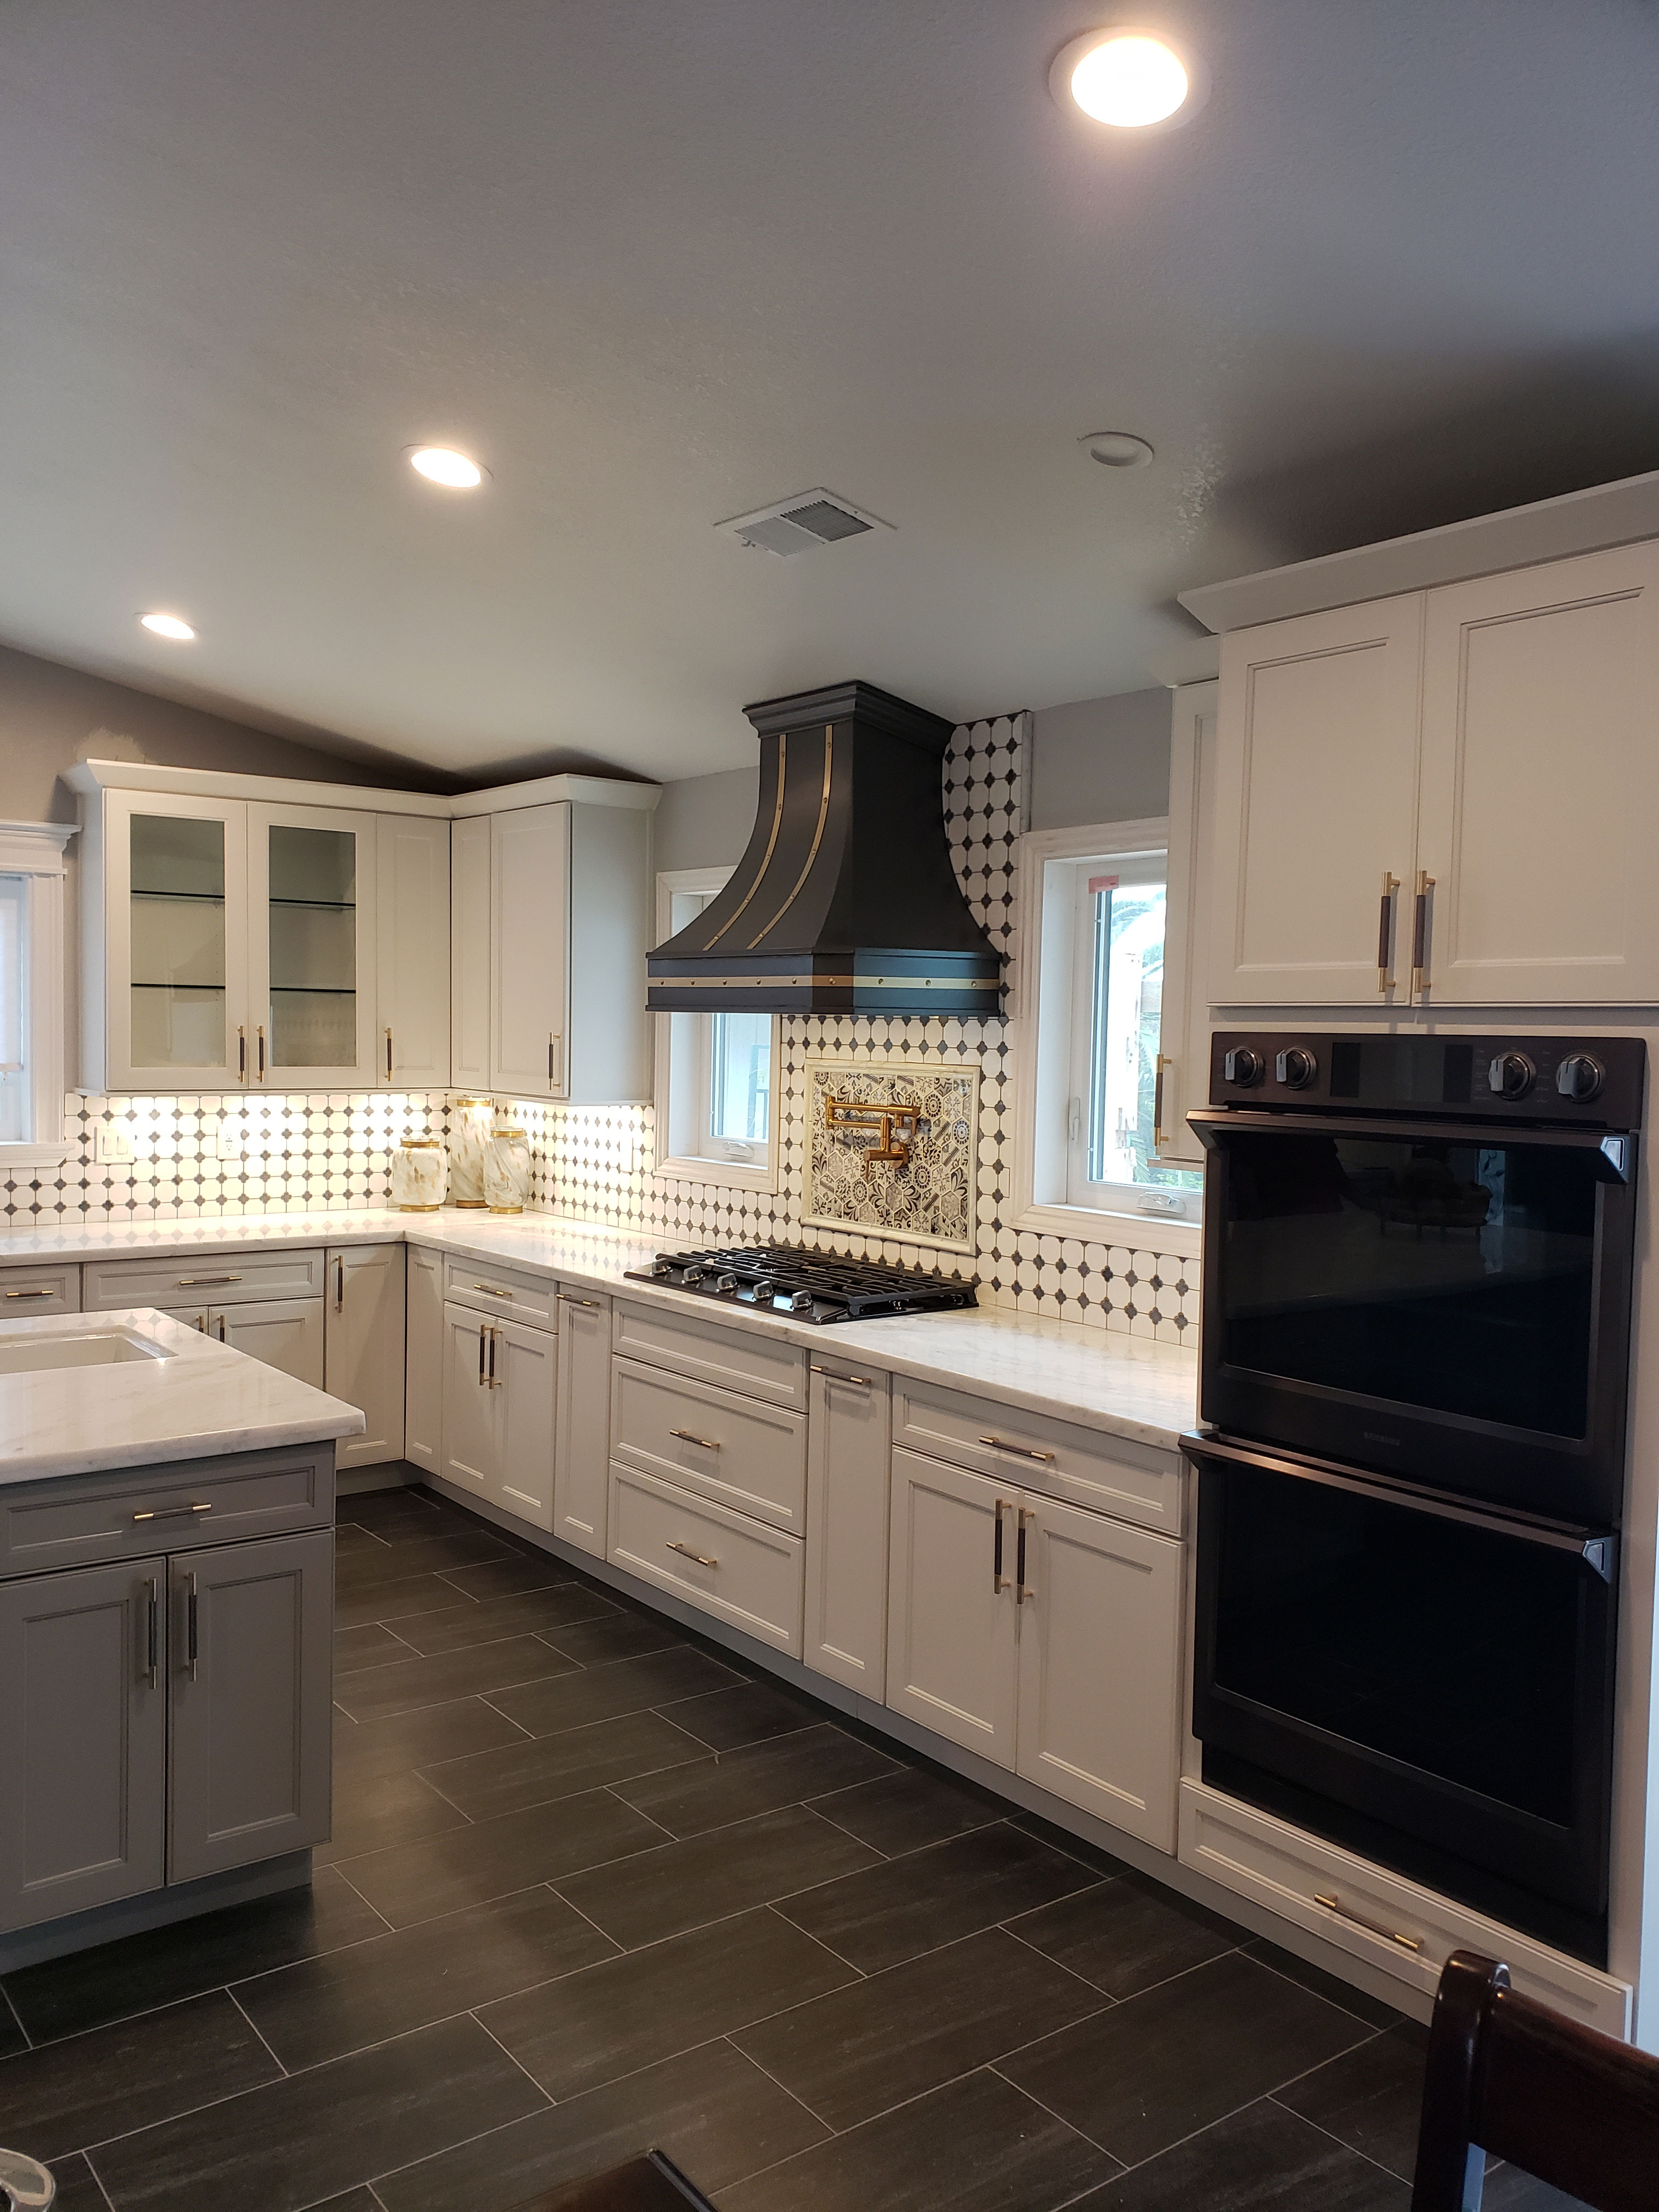 Inspiring kitchen design idea with, range hood, white kitchen cabinets,marble kitchen countertops, a marble backsplash